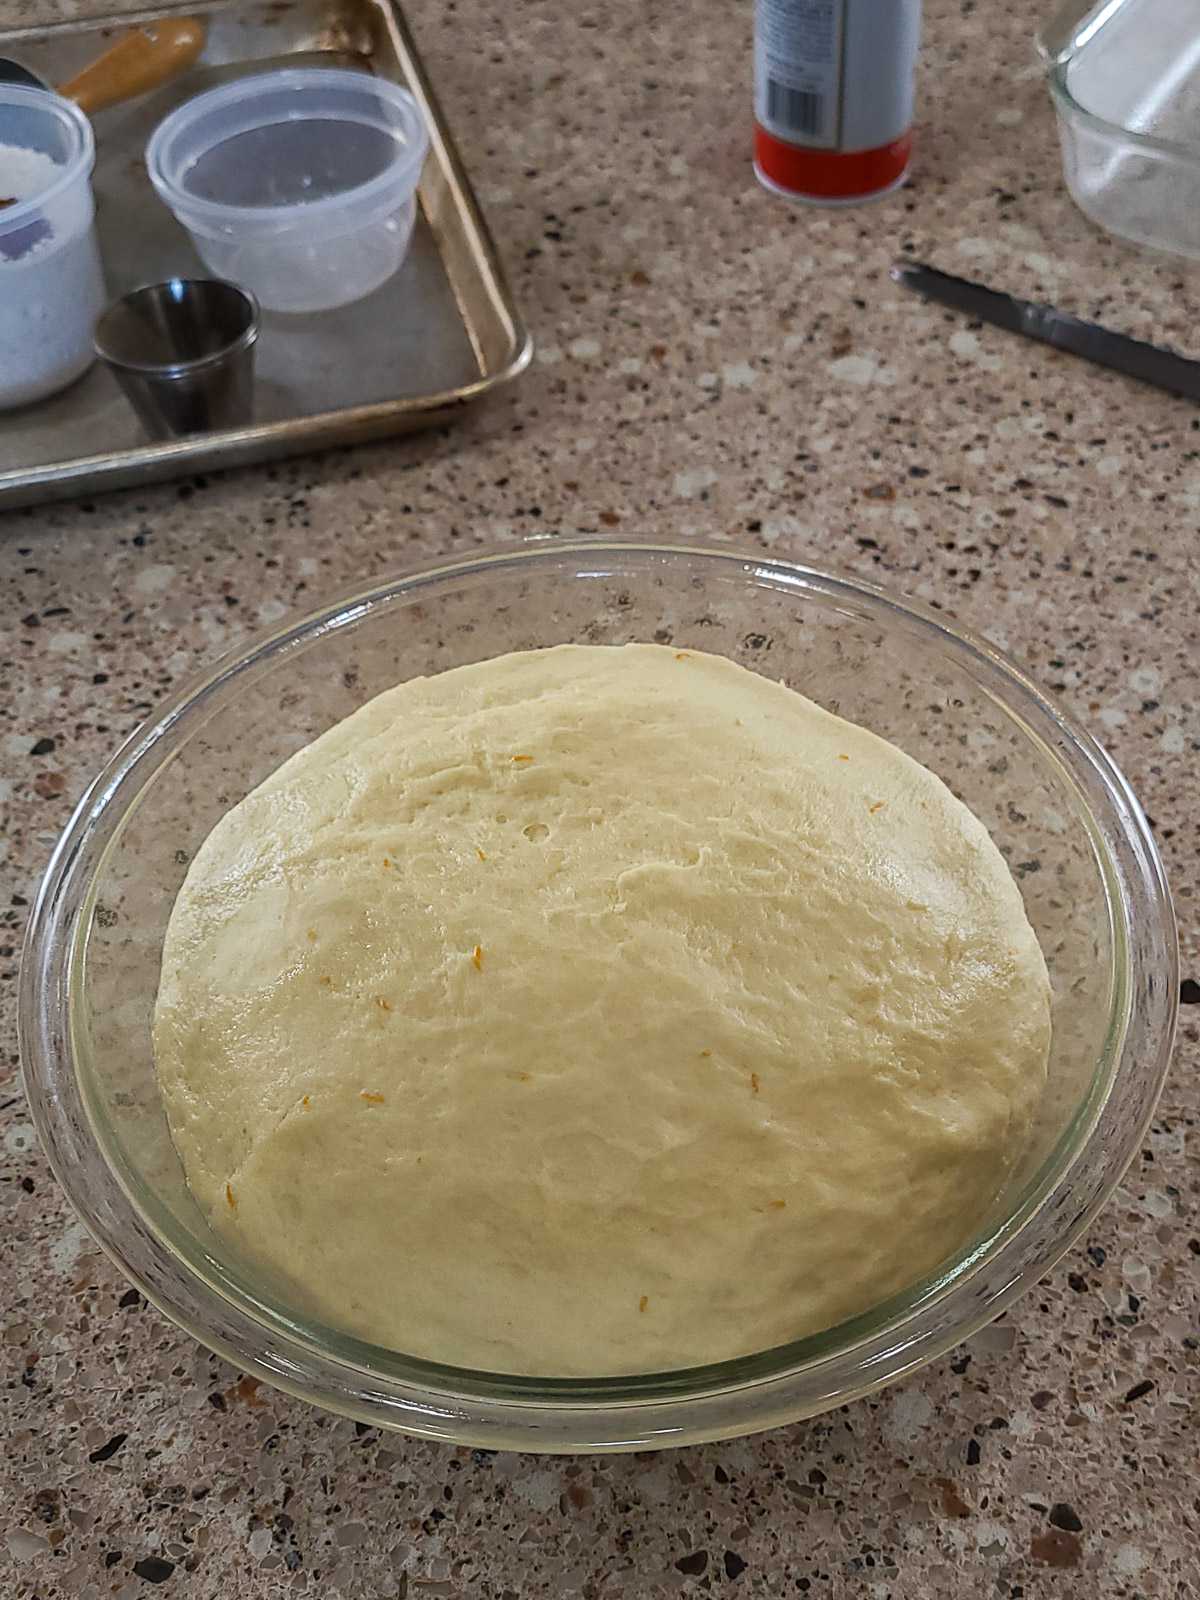 raised cinnamon roll dough in a bowl